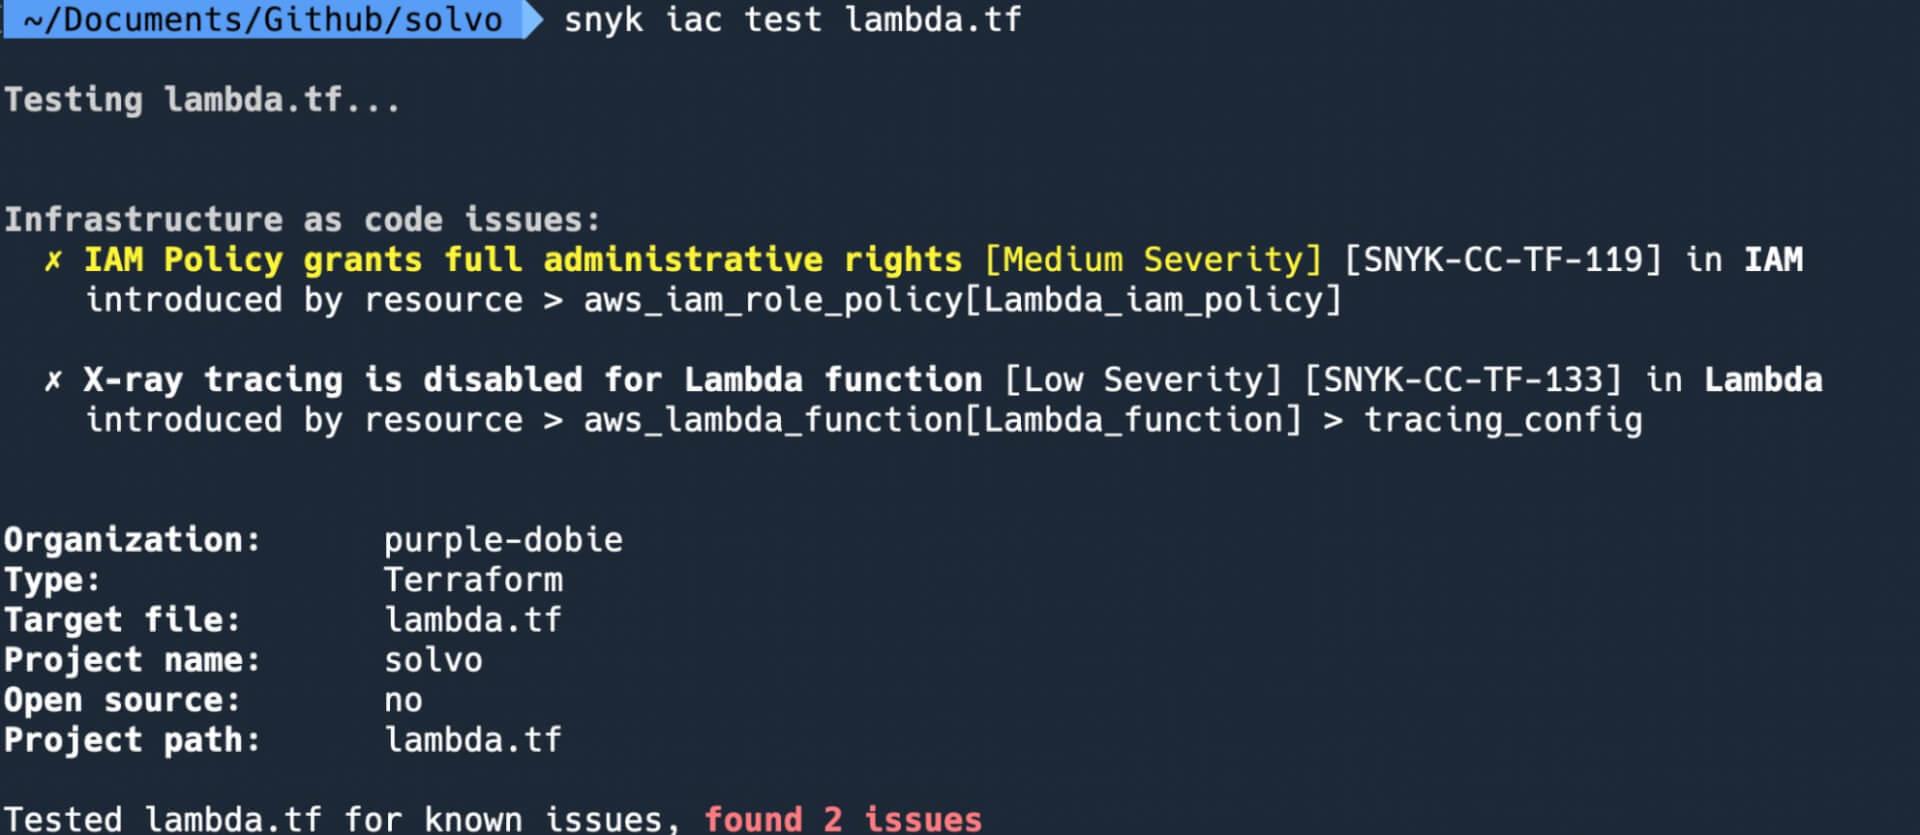 wordpress-sync/blog-solvo-snyk-iac-lambda-2-issues